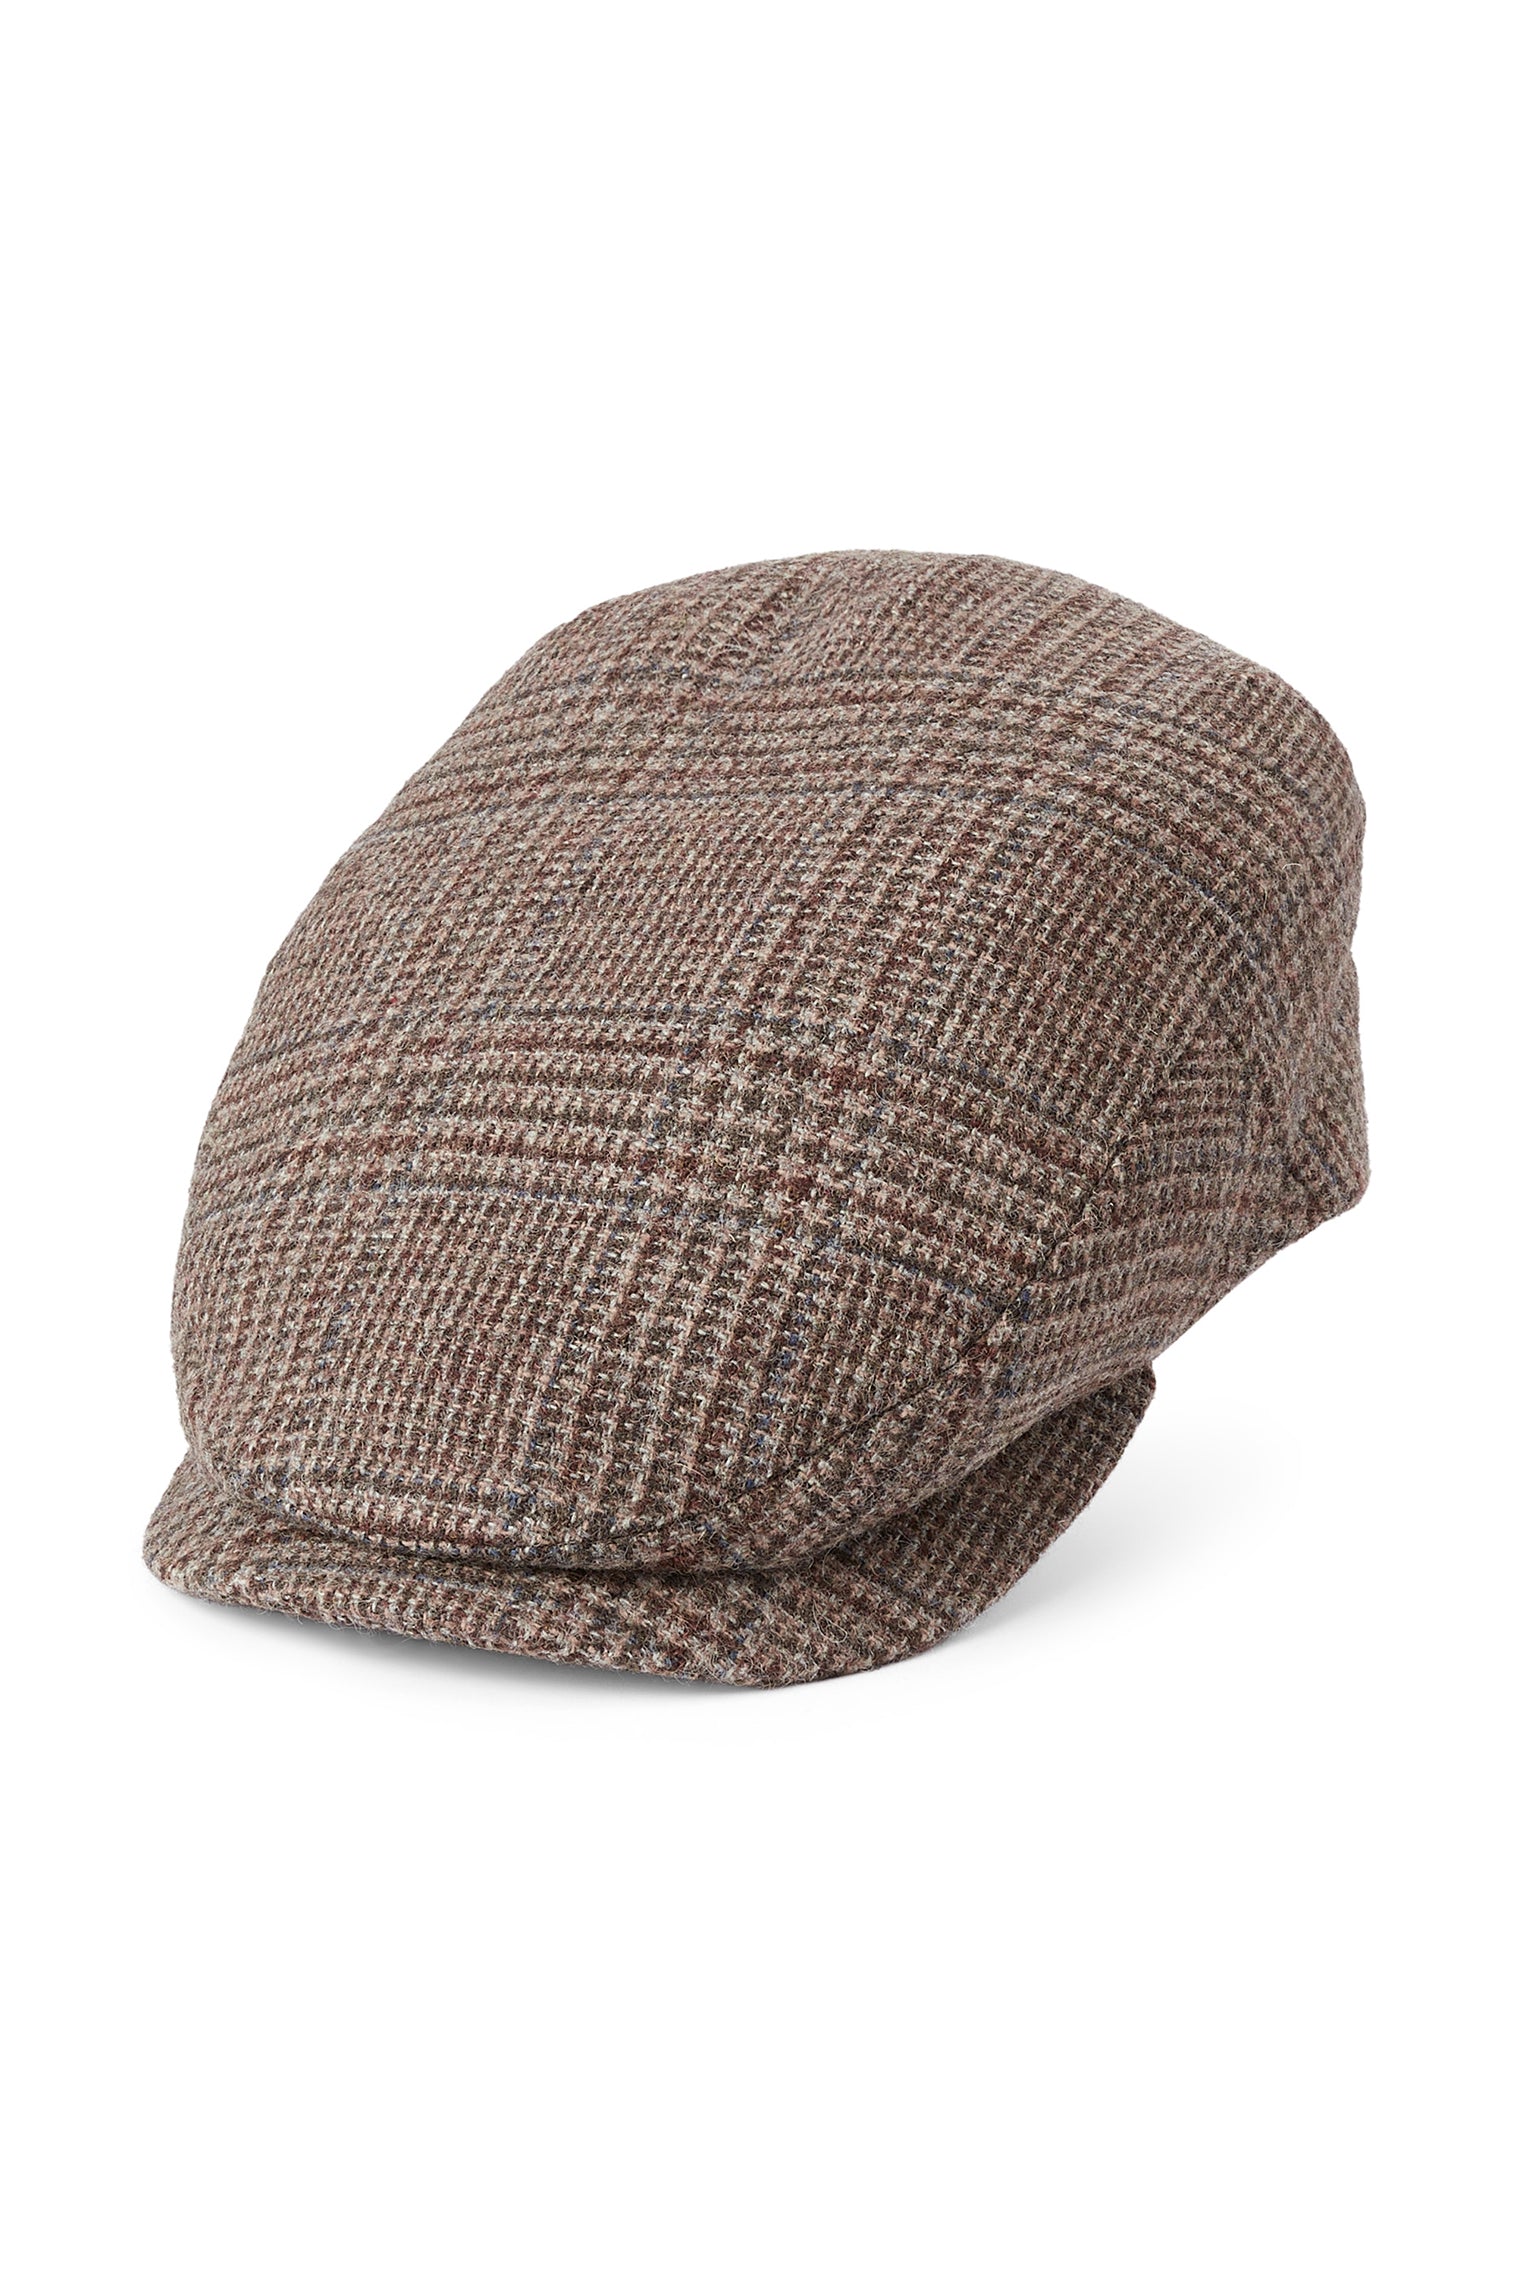 Drifter Glen Check Flat Cap - New Season Hat Collection - Lock & Co. Hatters London UK